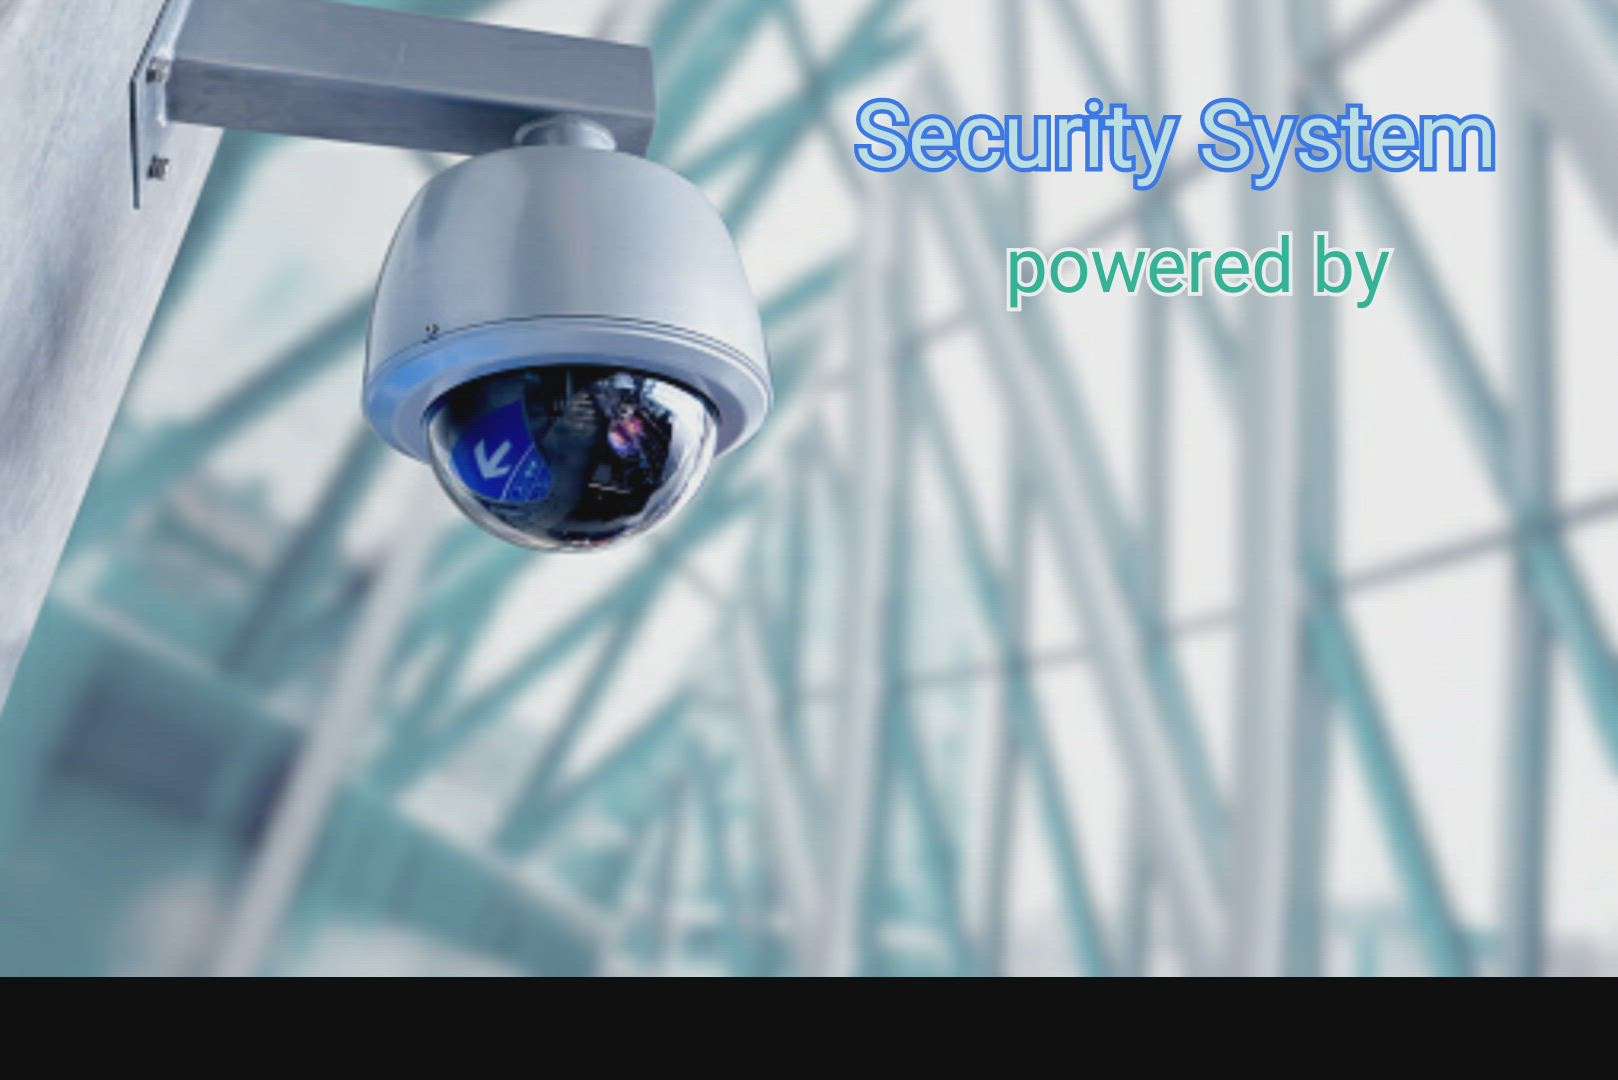 CCTV Installation and Services

CCTV Camera വർക്കുകൾ കുറഞ്ഞ ചിലവിൽ ചെയ്തു കൊടുക്കുന്നു.